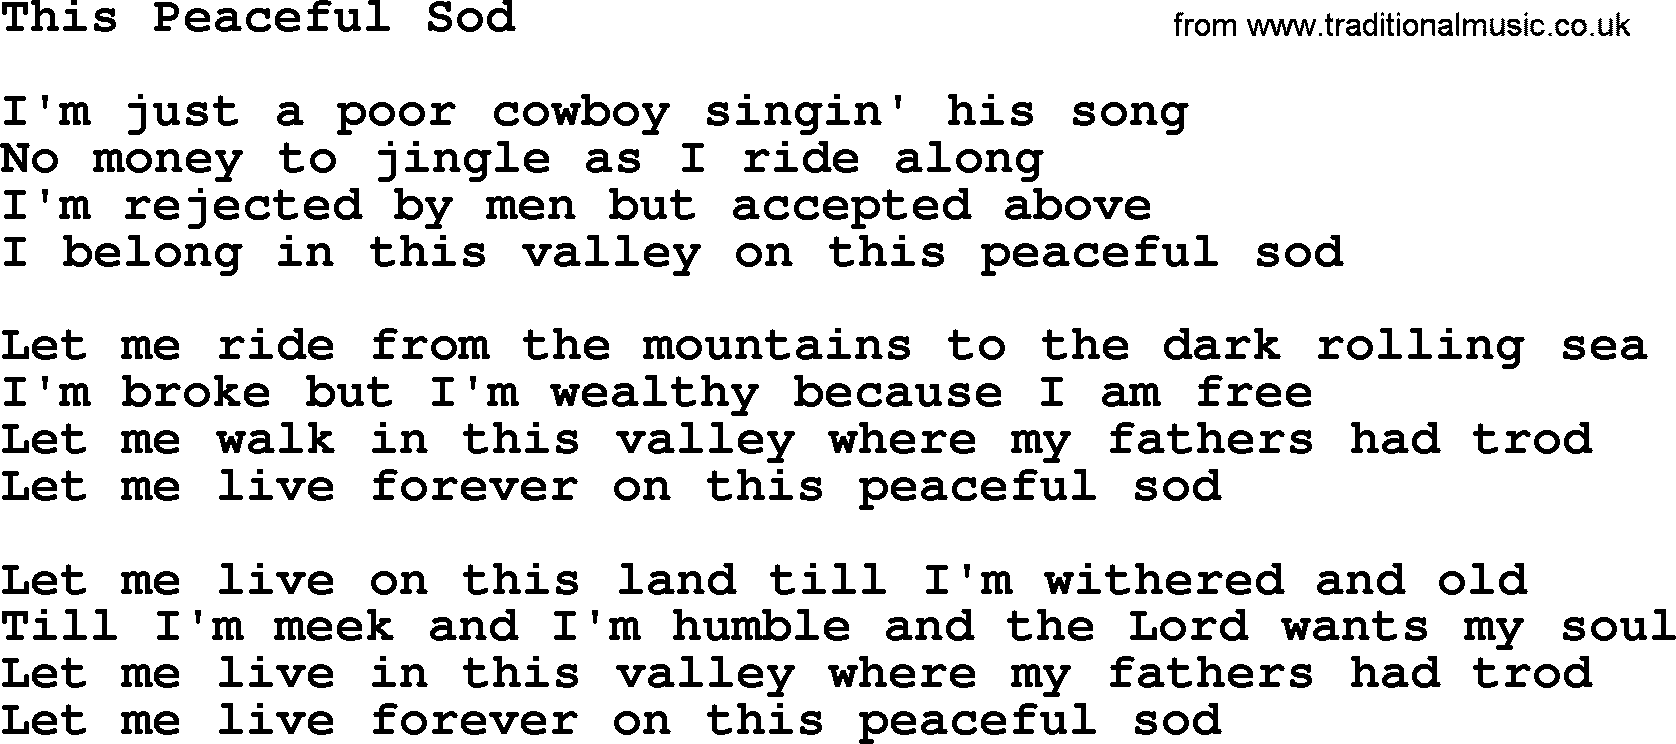 Marty Robbins song: This Peaceful Sod, lyrics